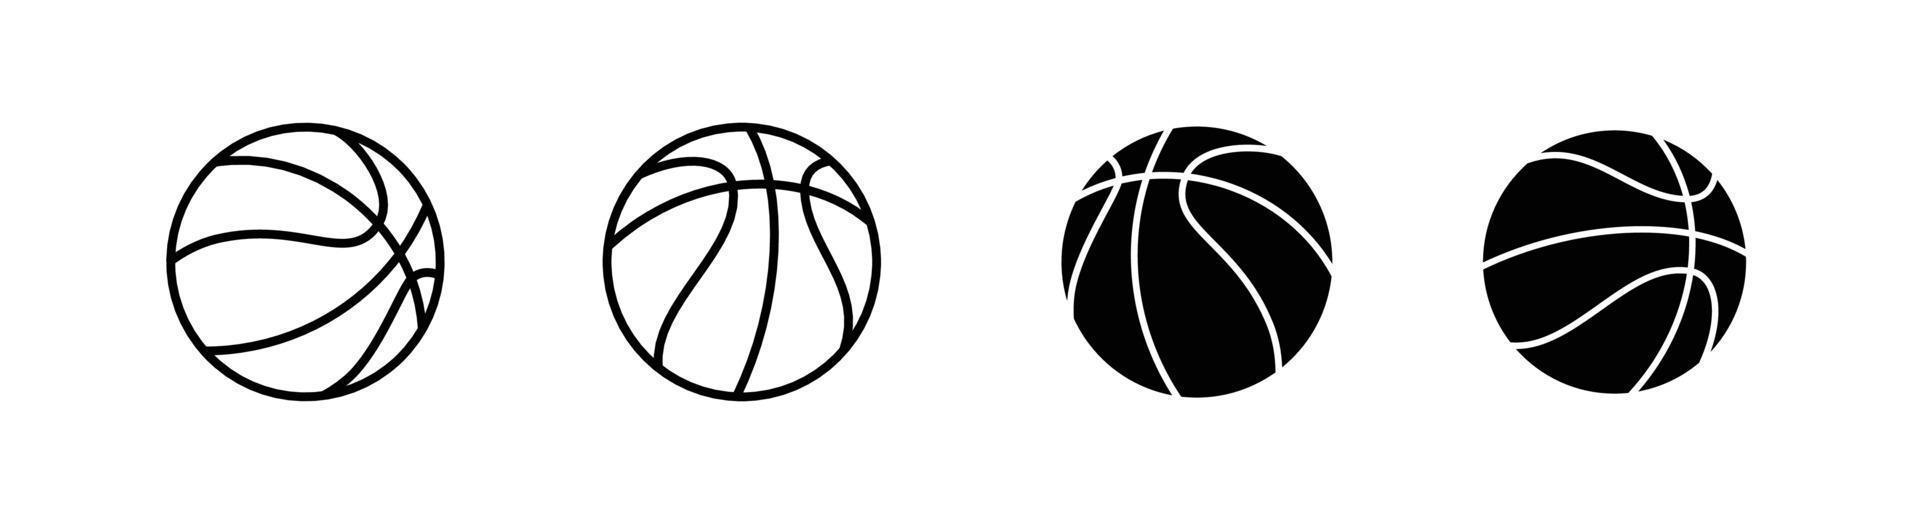 Basketball-Symbol-Gestaltungselement, Clipart-Vorlagenillustration vektor